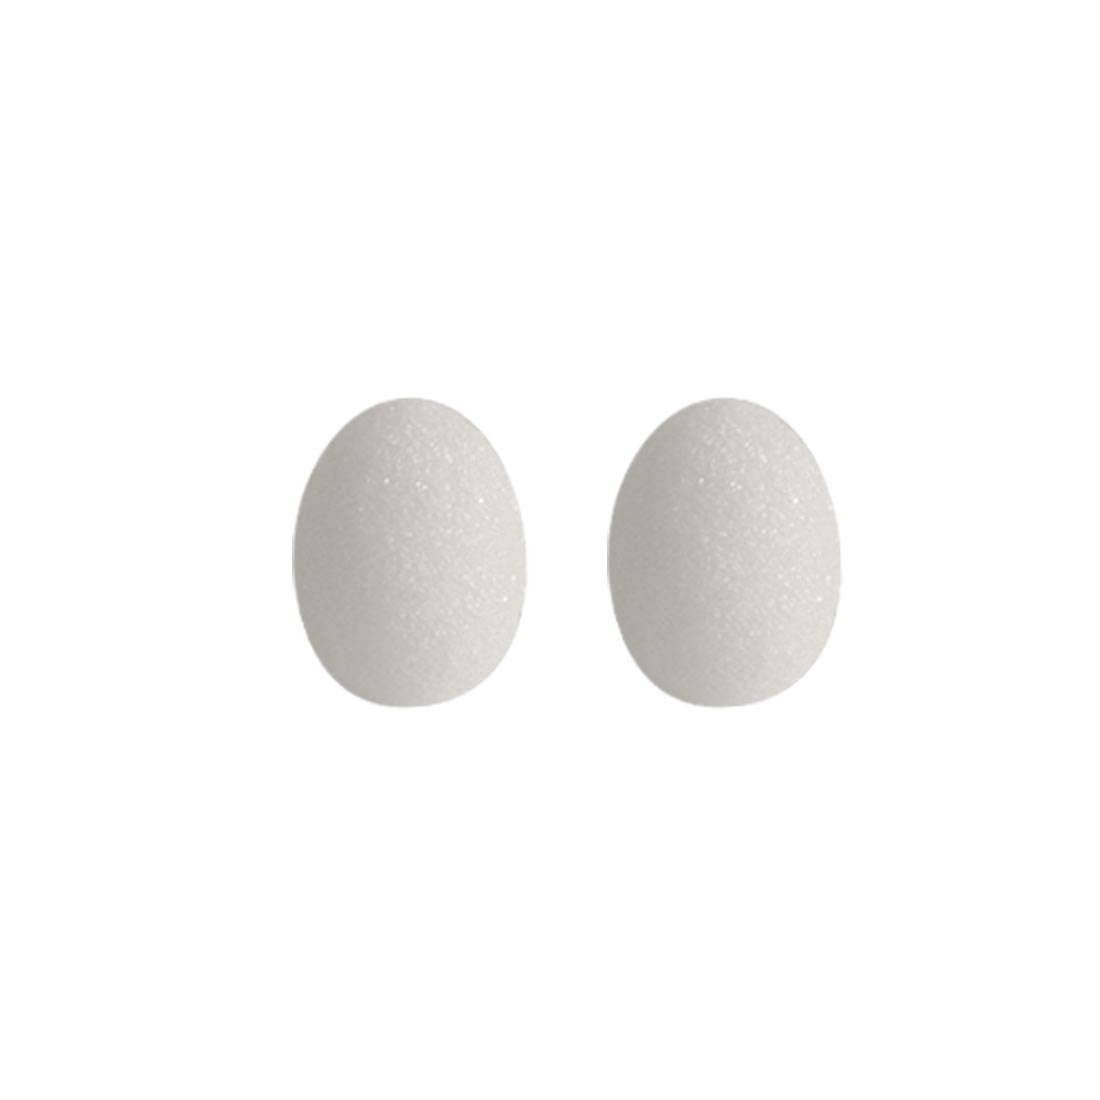 Two White craft foam Eggs